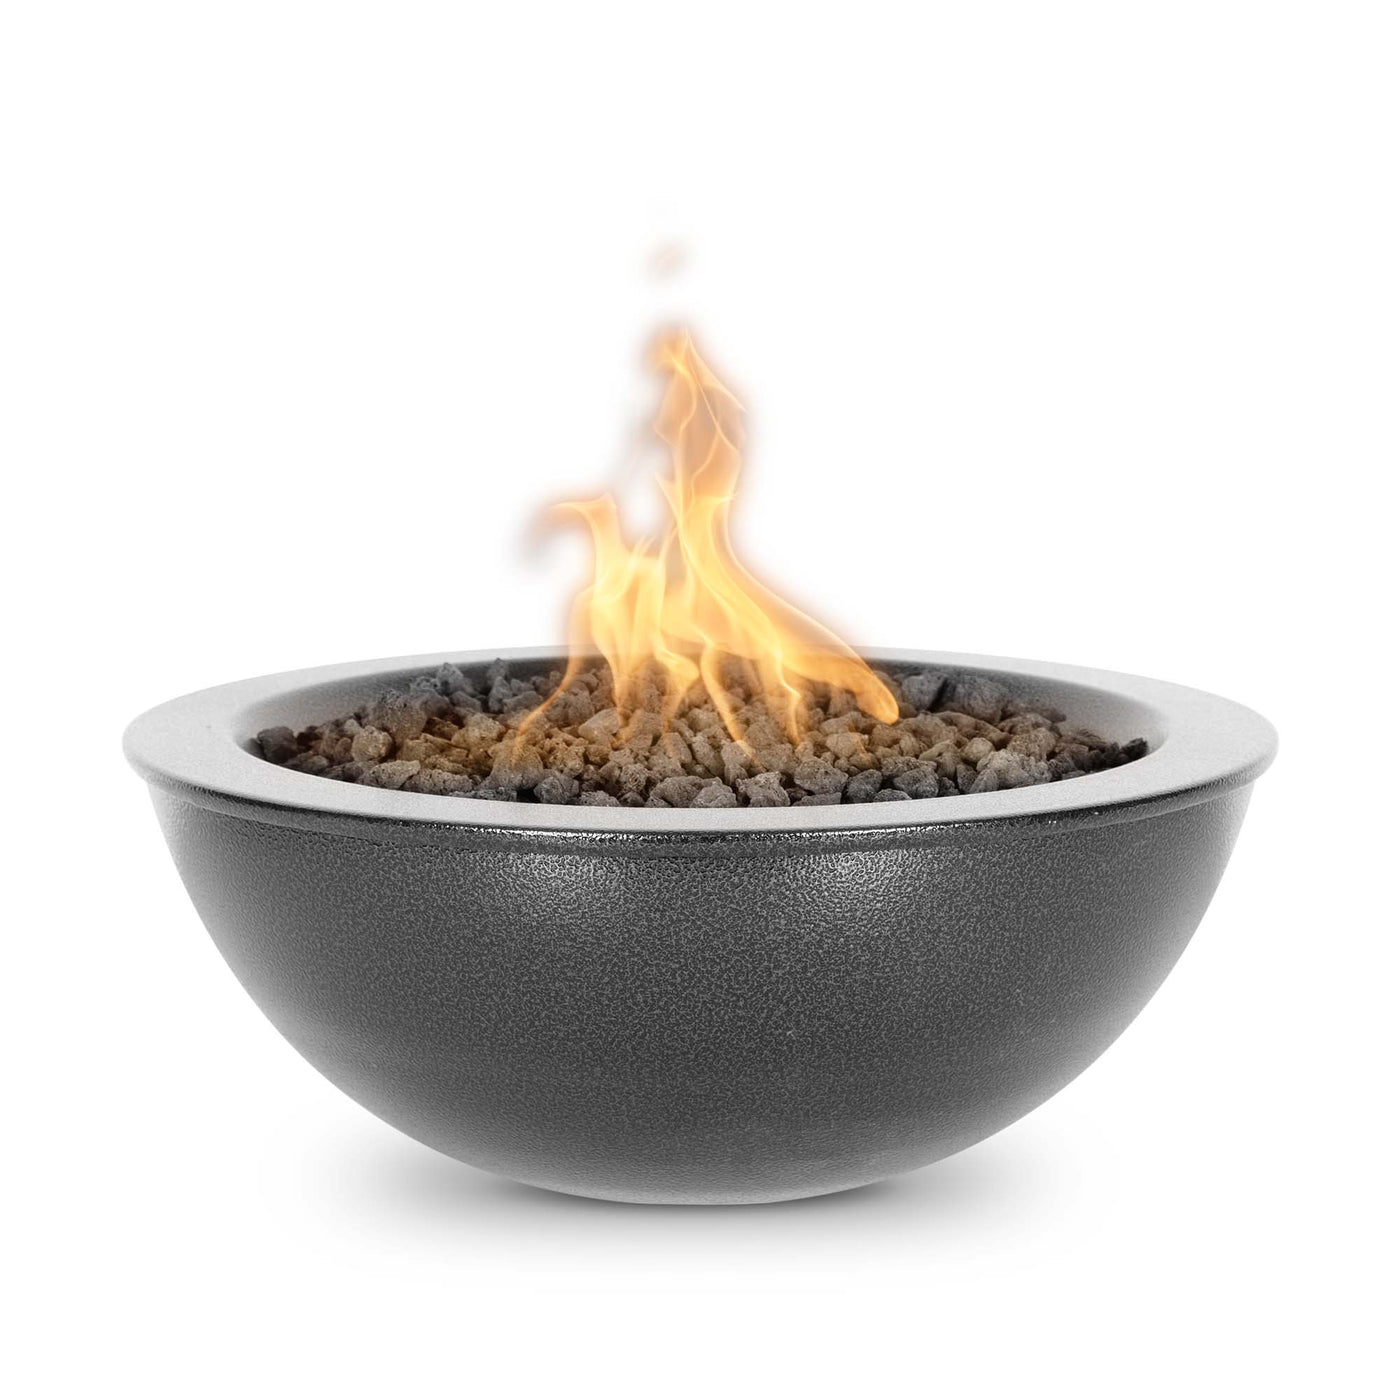 Sedona Powder Coated Metal Fire Bowl